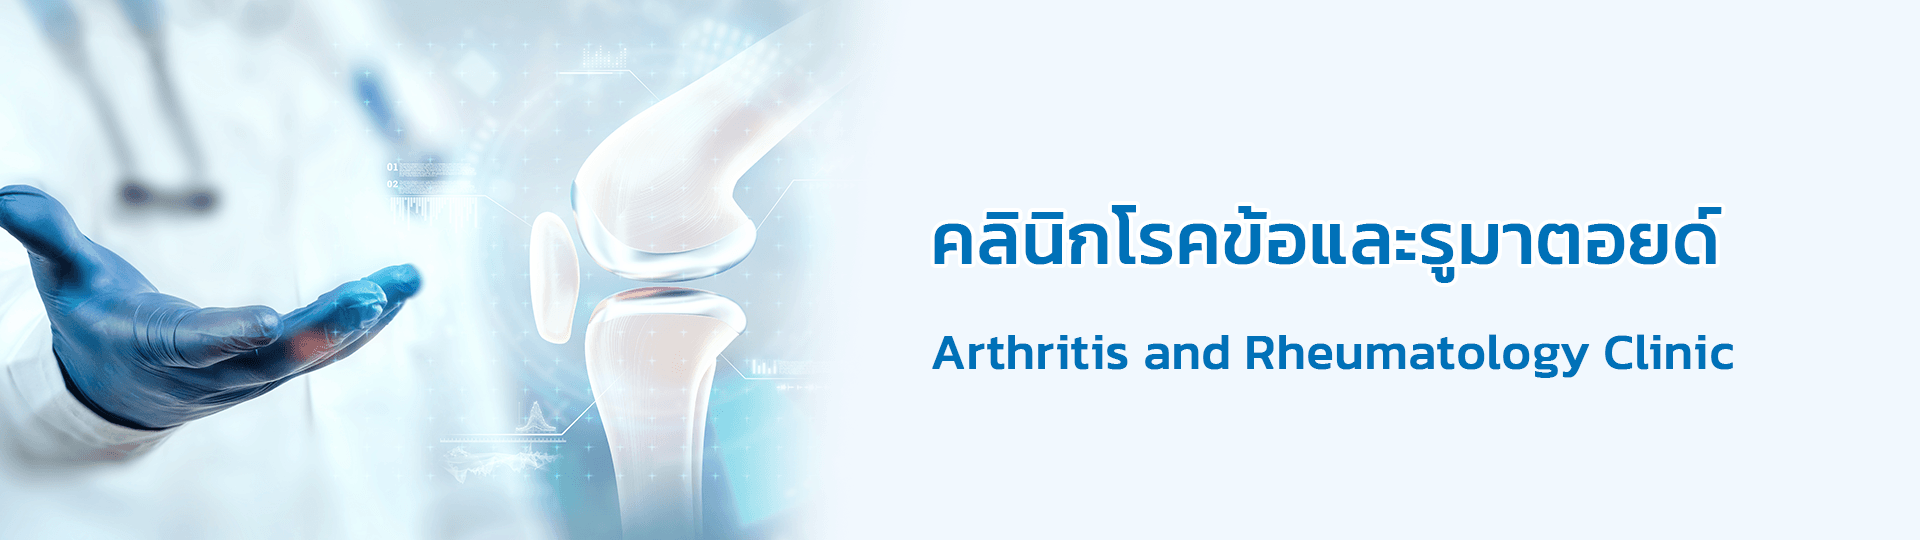 Arthritis and Rheumatology Clinic.png